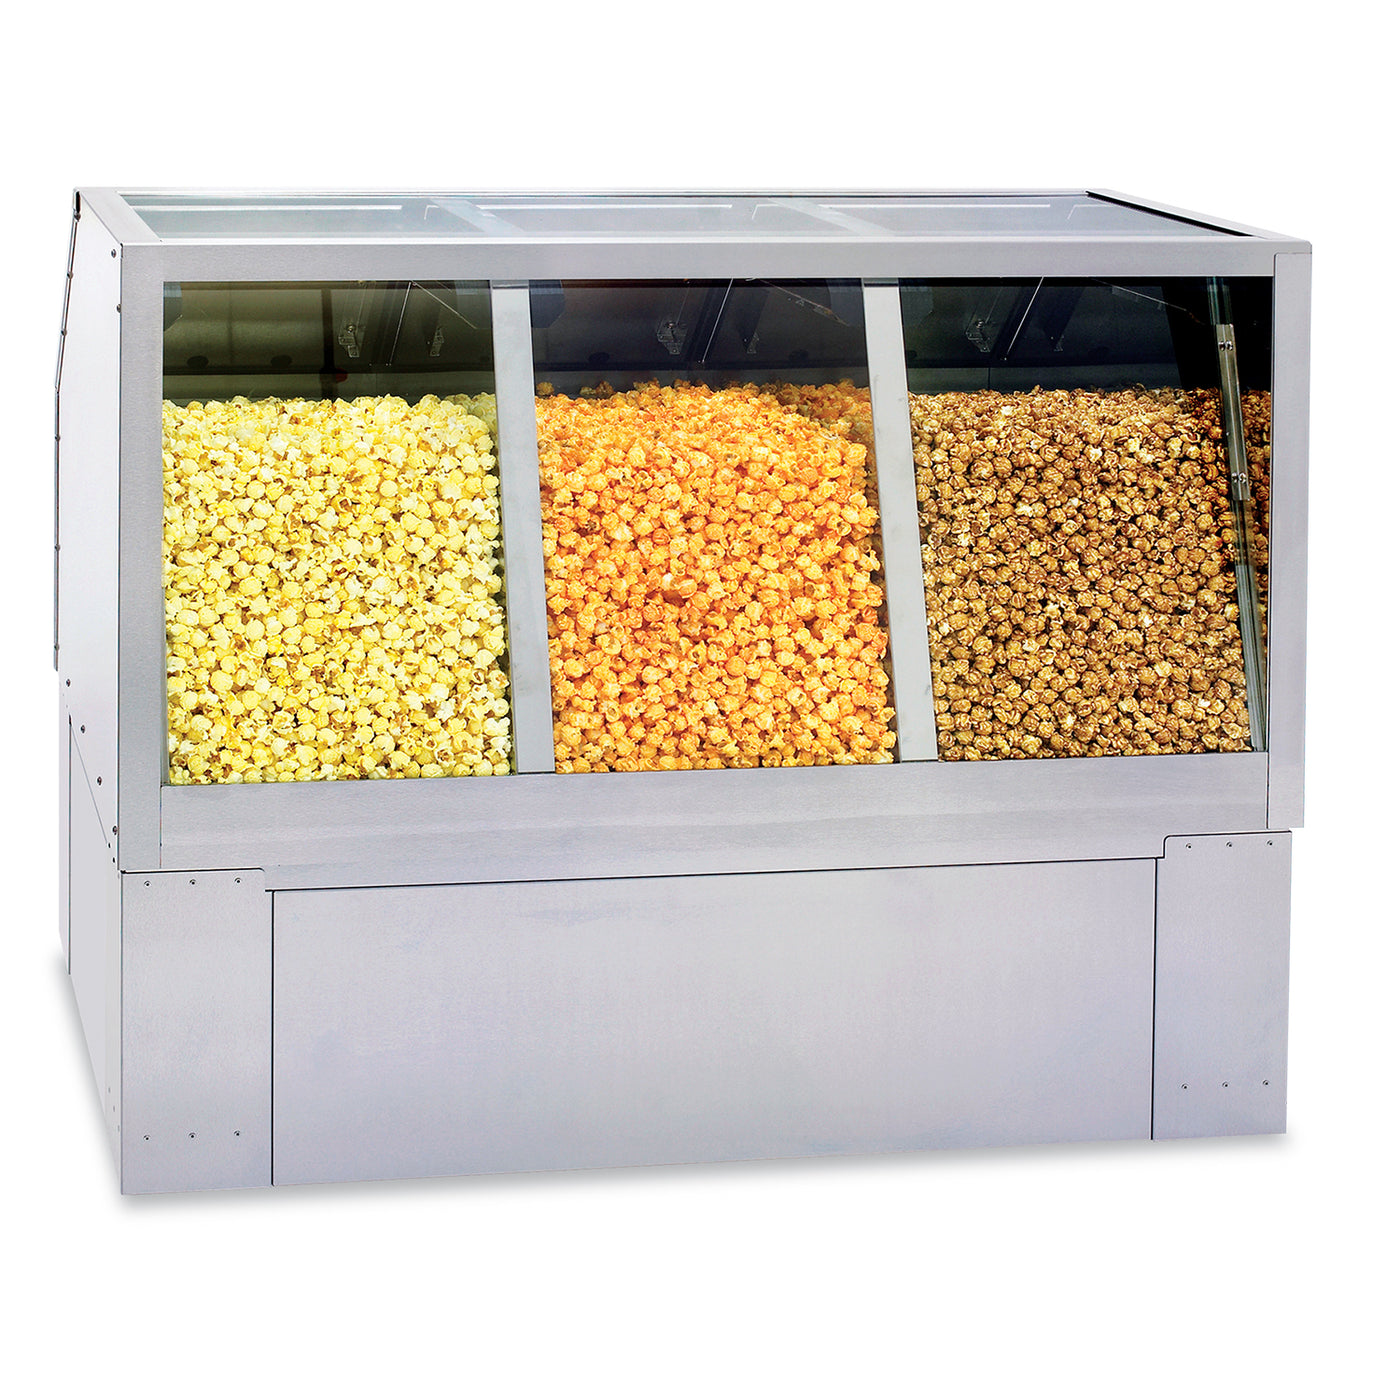 Main Street Popcorn Crisper/Staging Cabinet - Gold Medal #2687-00-030 –  Gold Medal Products Co.